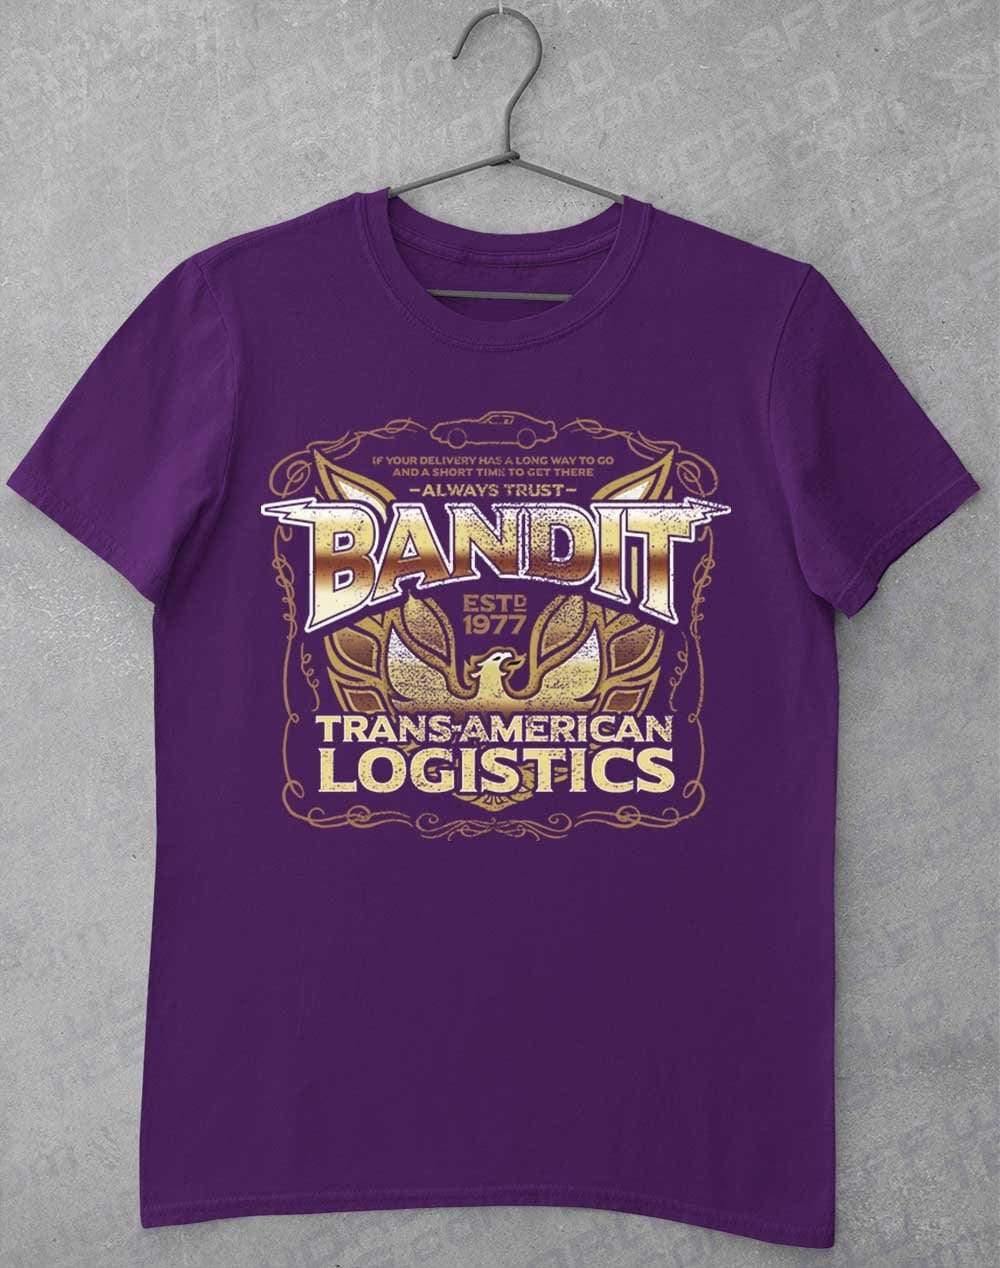 Bandit Logistics 1977 T-Shirt S / Purple  - Off World Tees